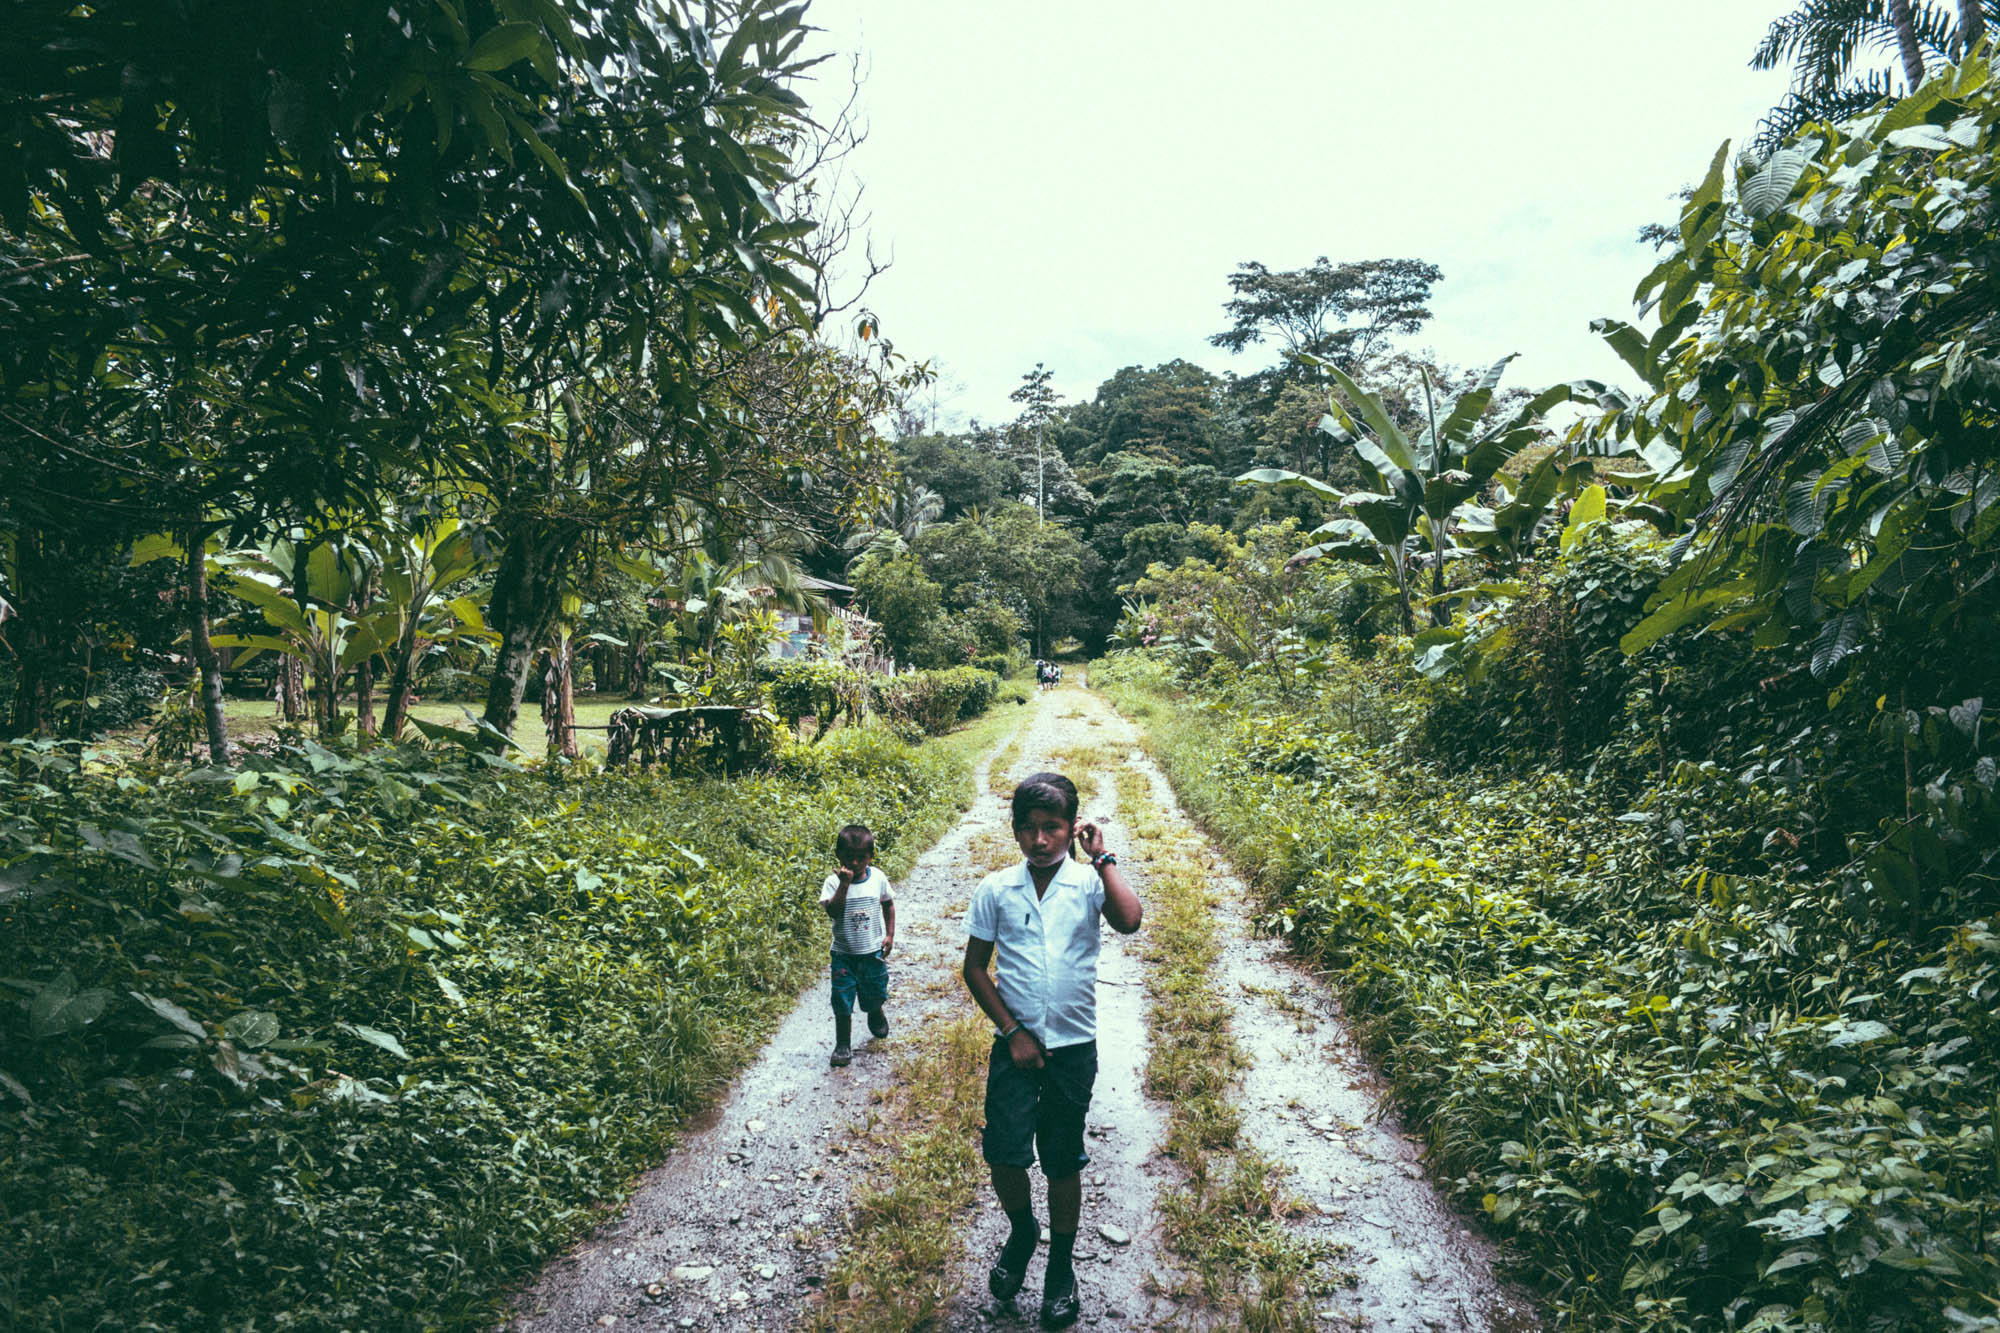 Costa Rica Mission Trips